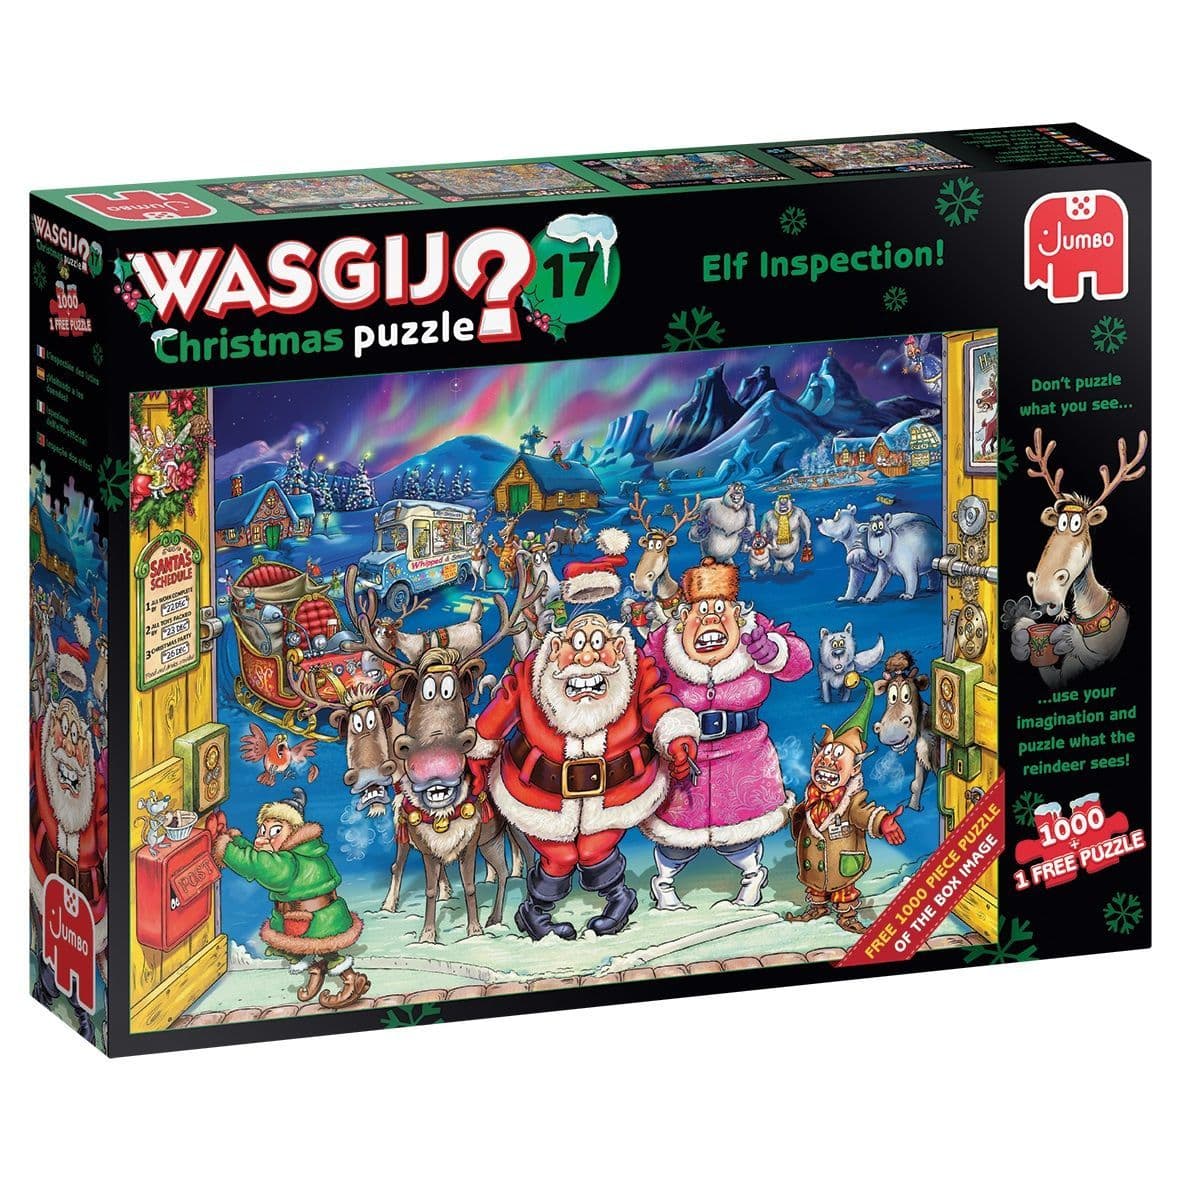 Wasgij Christmas 17 Elf Inspection! - 1000 Piece Jigsaw Puzzle